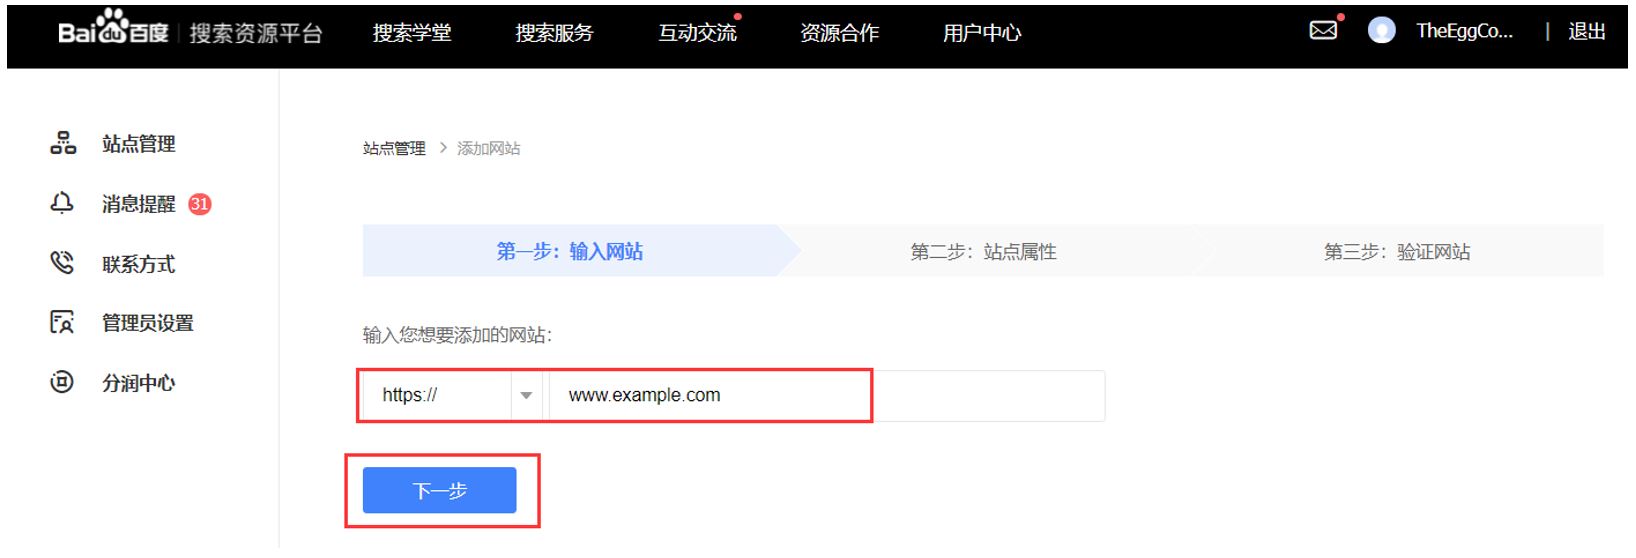 10. Baidu Webmaster Tools - Register your domain on Baidu